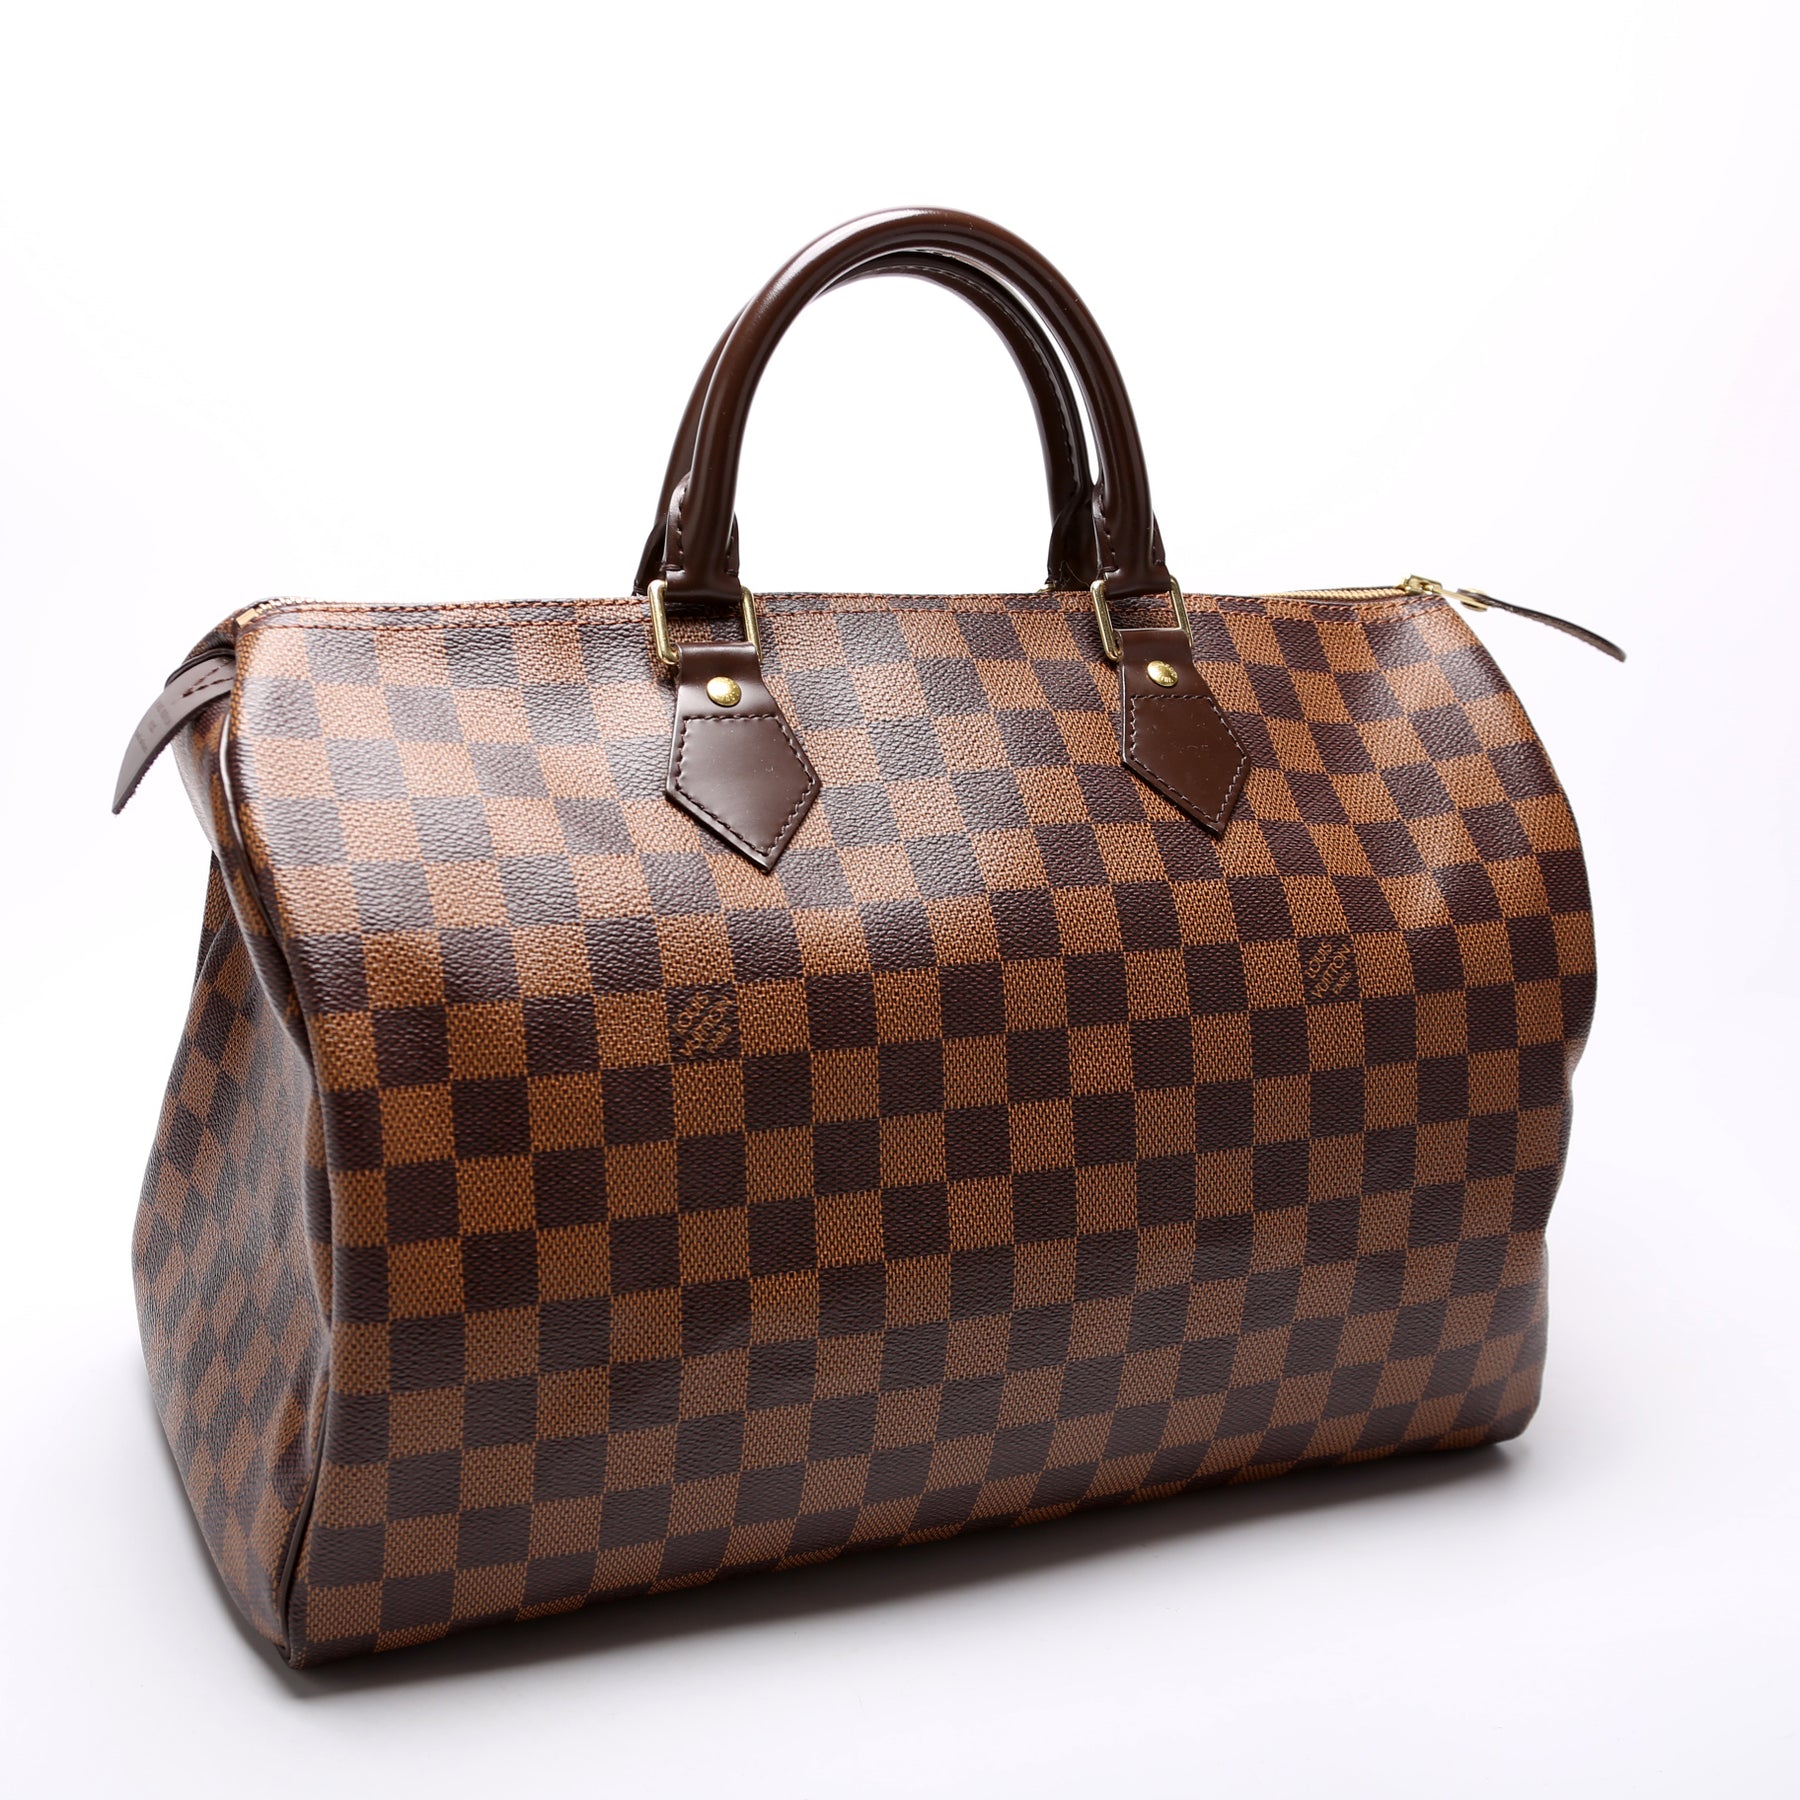 Louis Vuitton Speedy 35 Damier Ebene Satchel Bag